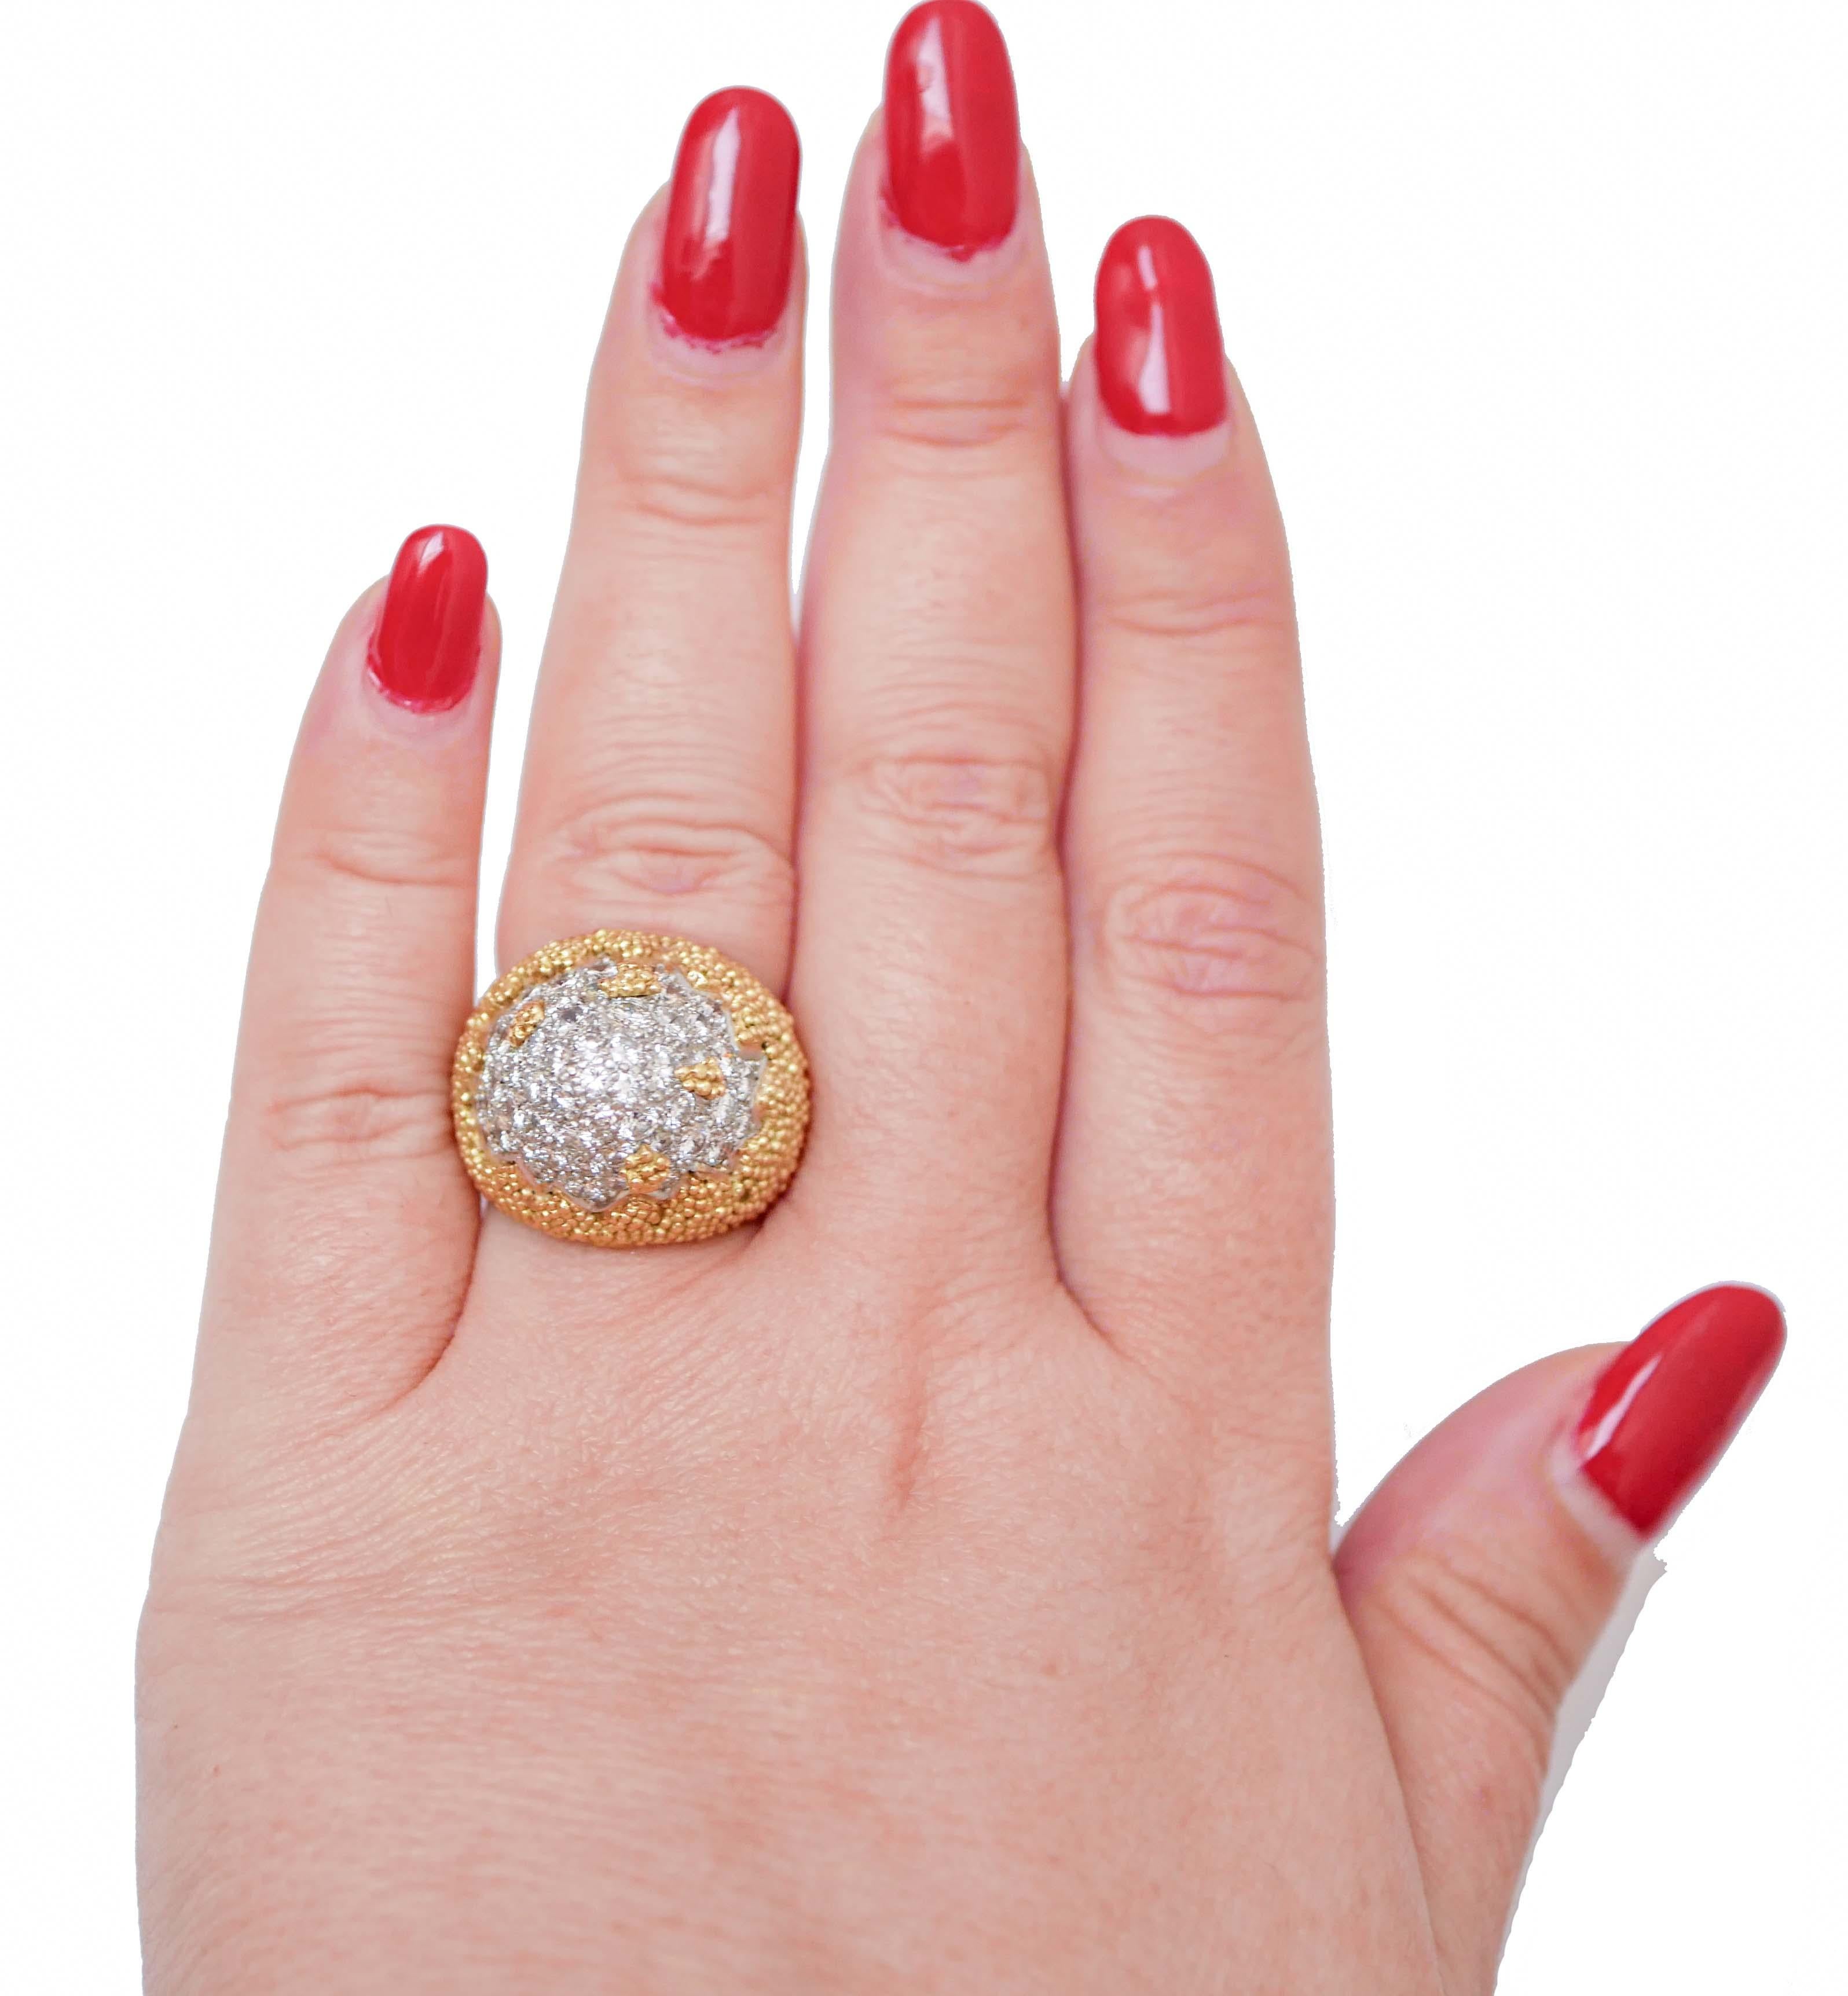 Brilliant Cut Diamonds, 18 Karat Yellow Gold and White Gold Dome Ring.